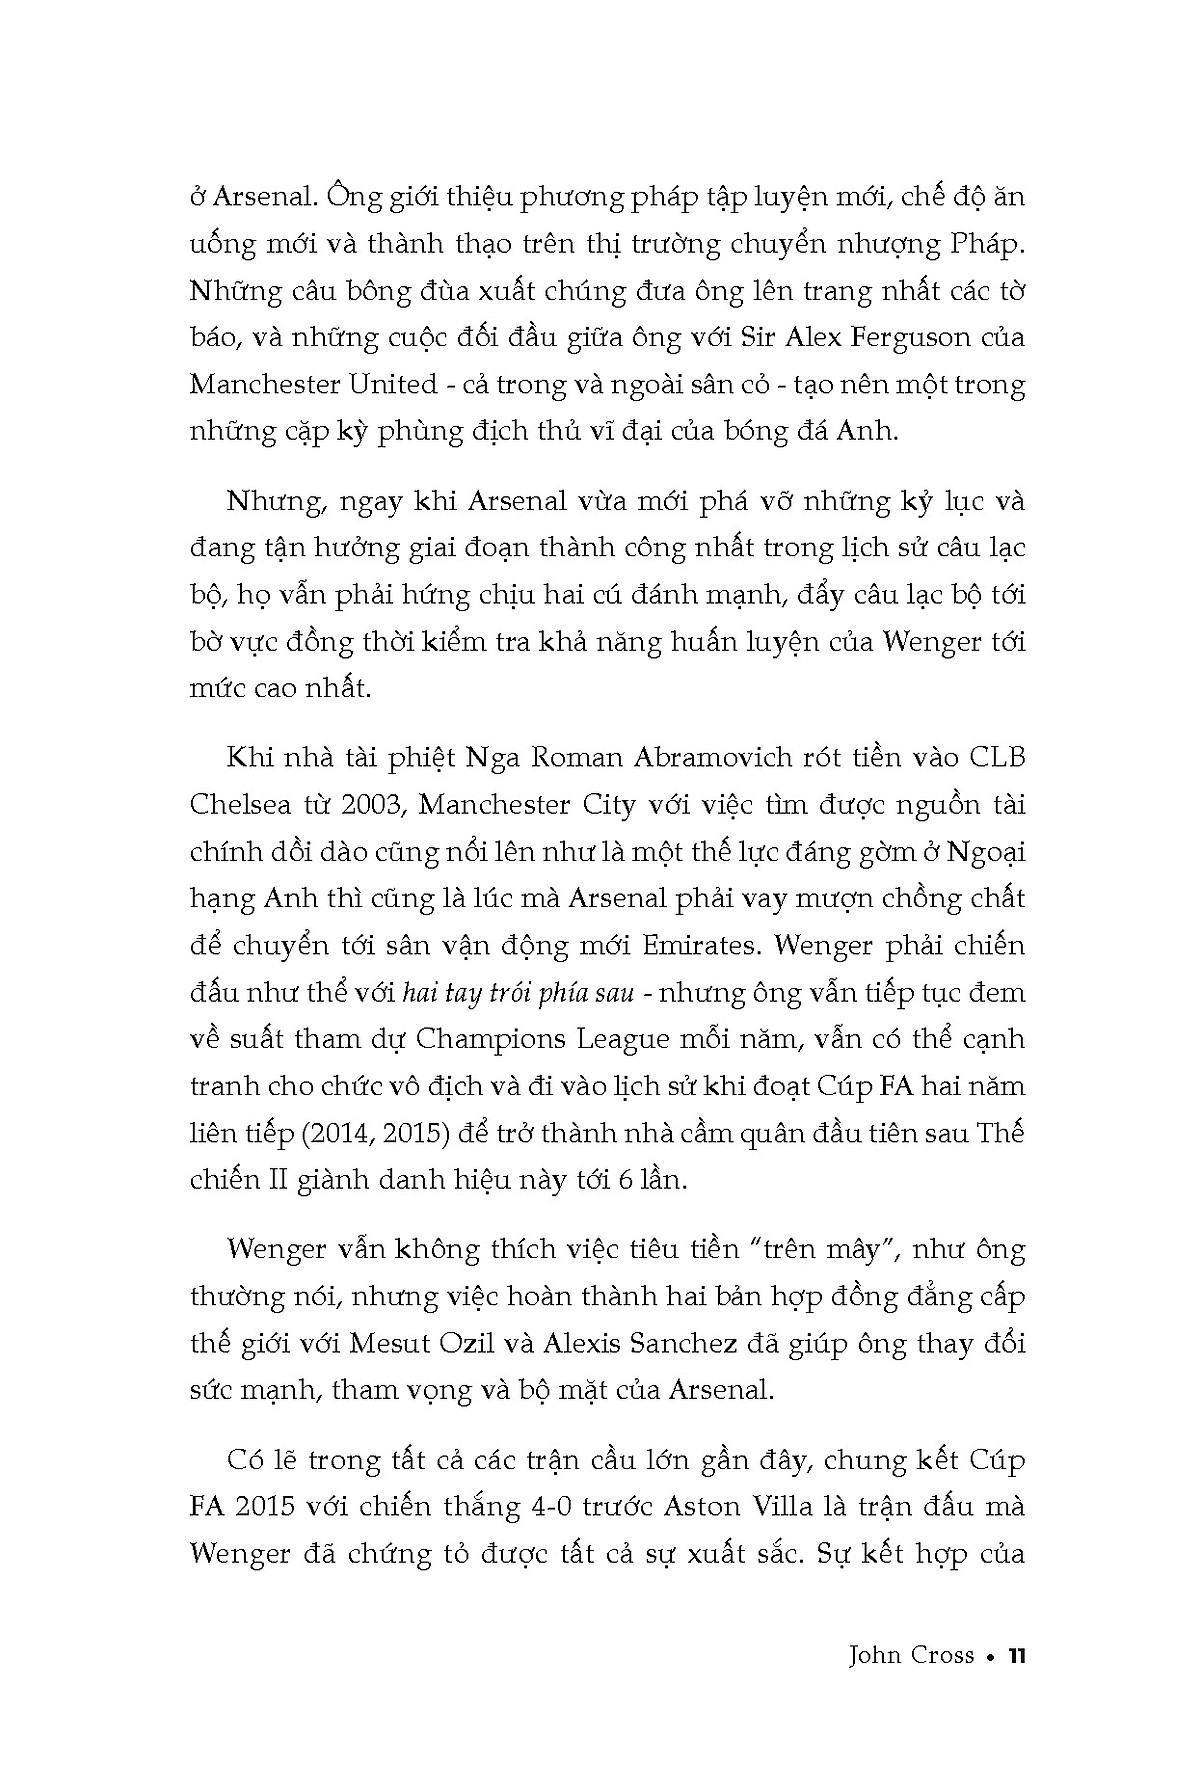 Arsene Wenger và câu chuyện Arsenal 1996-2018